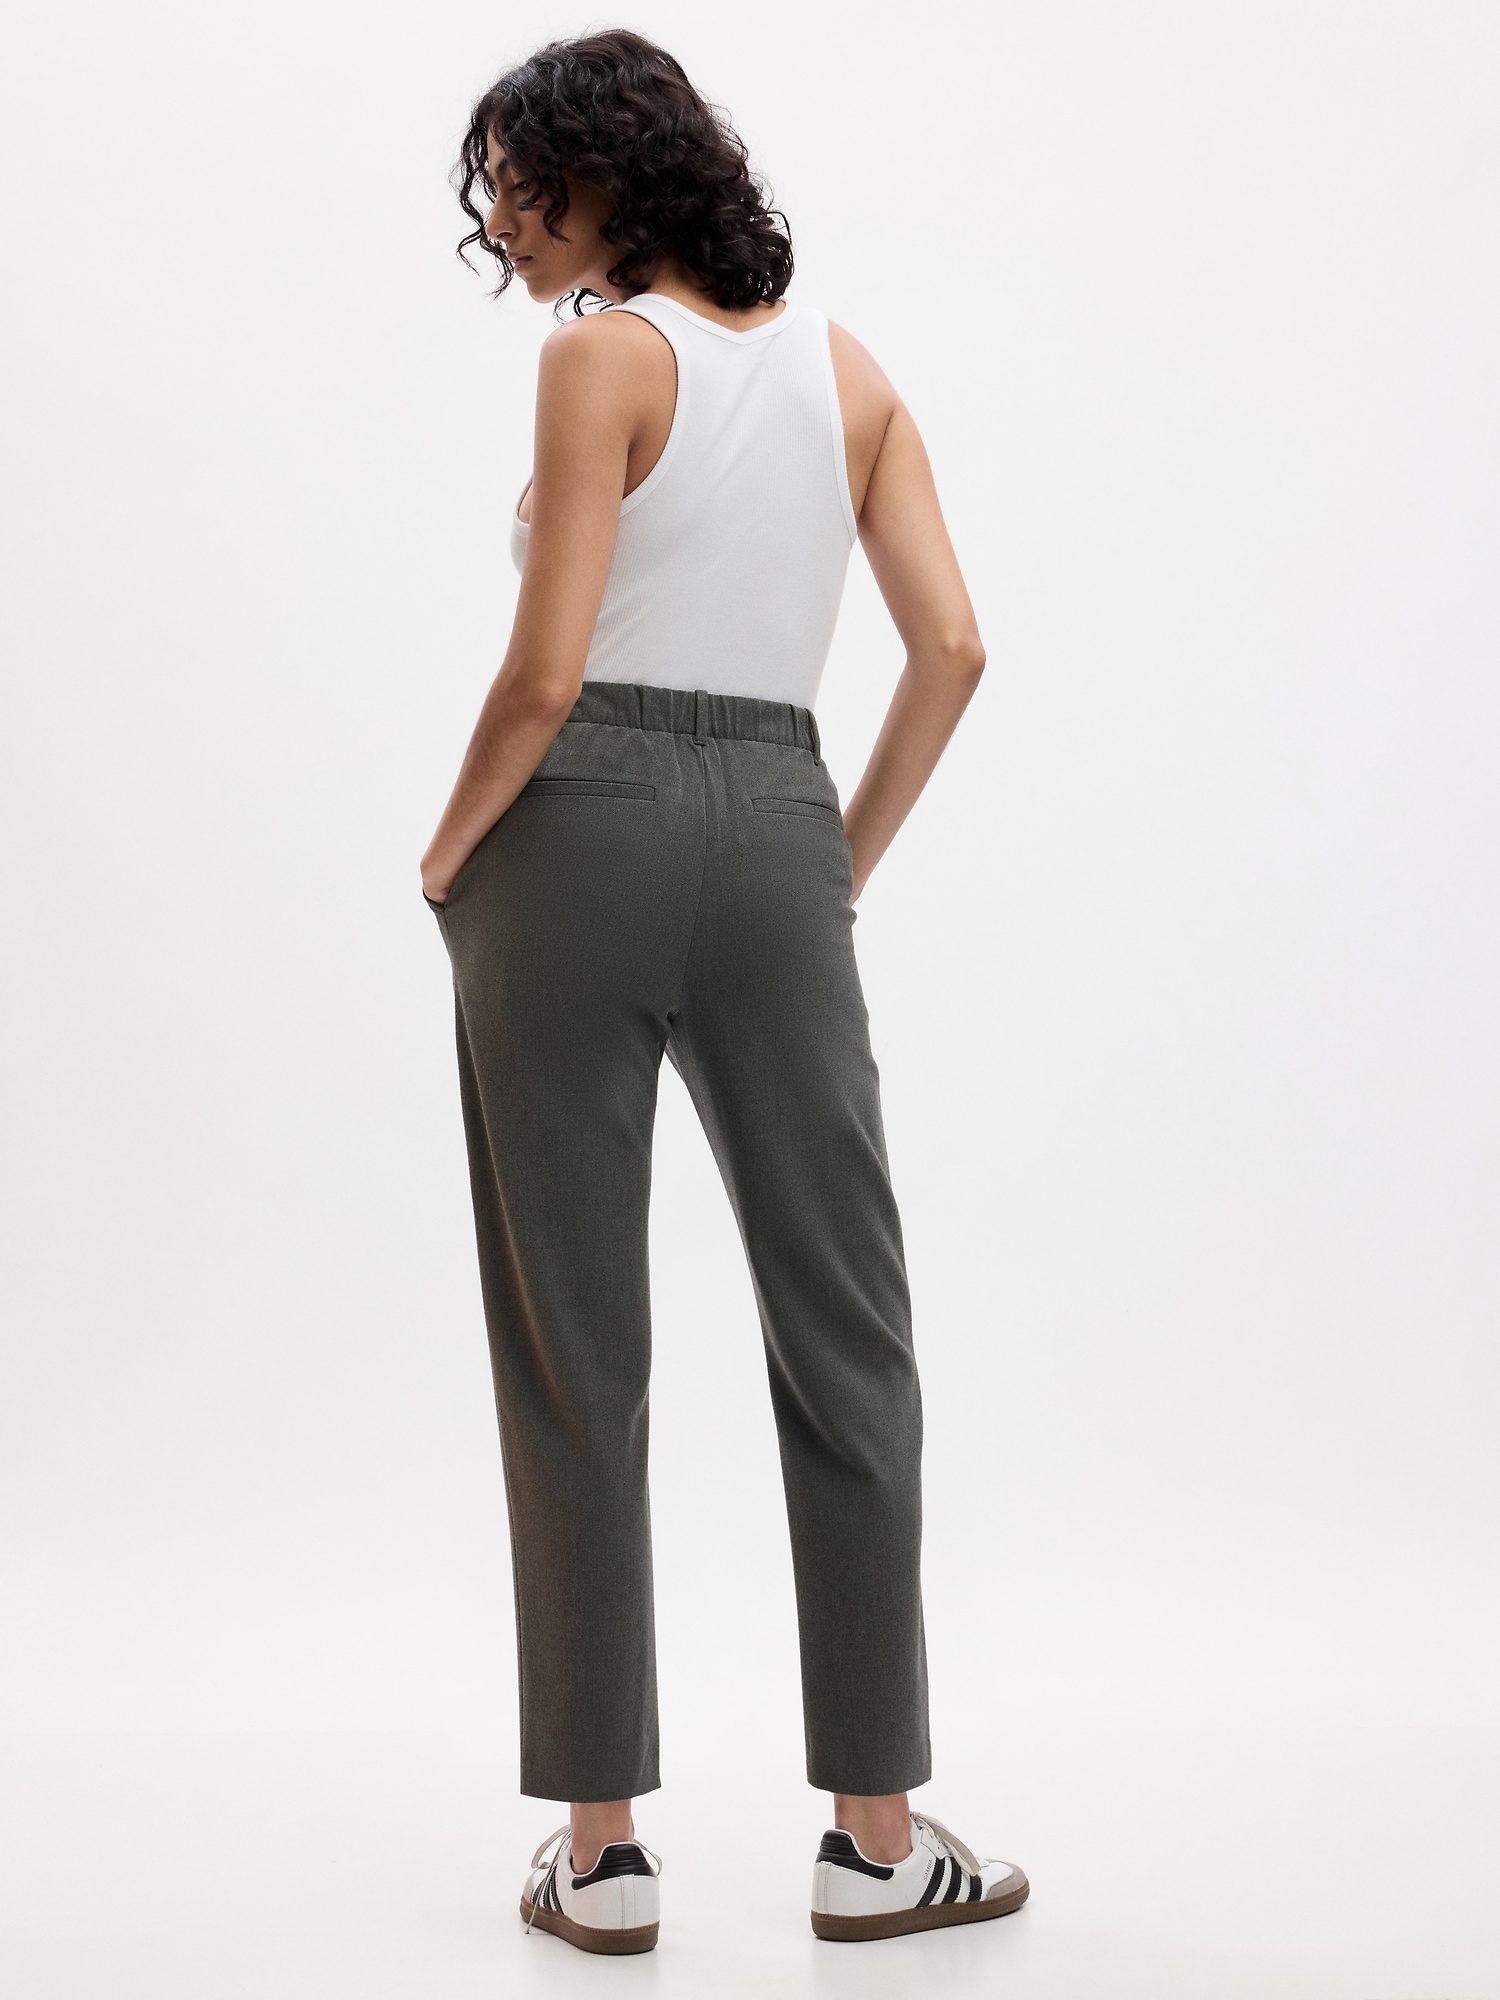 GAP Womens Cozy Rib Pant Acorn XL at Amazon Women's Clothing store